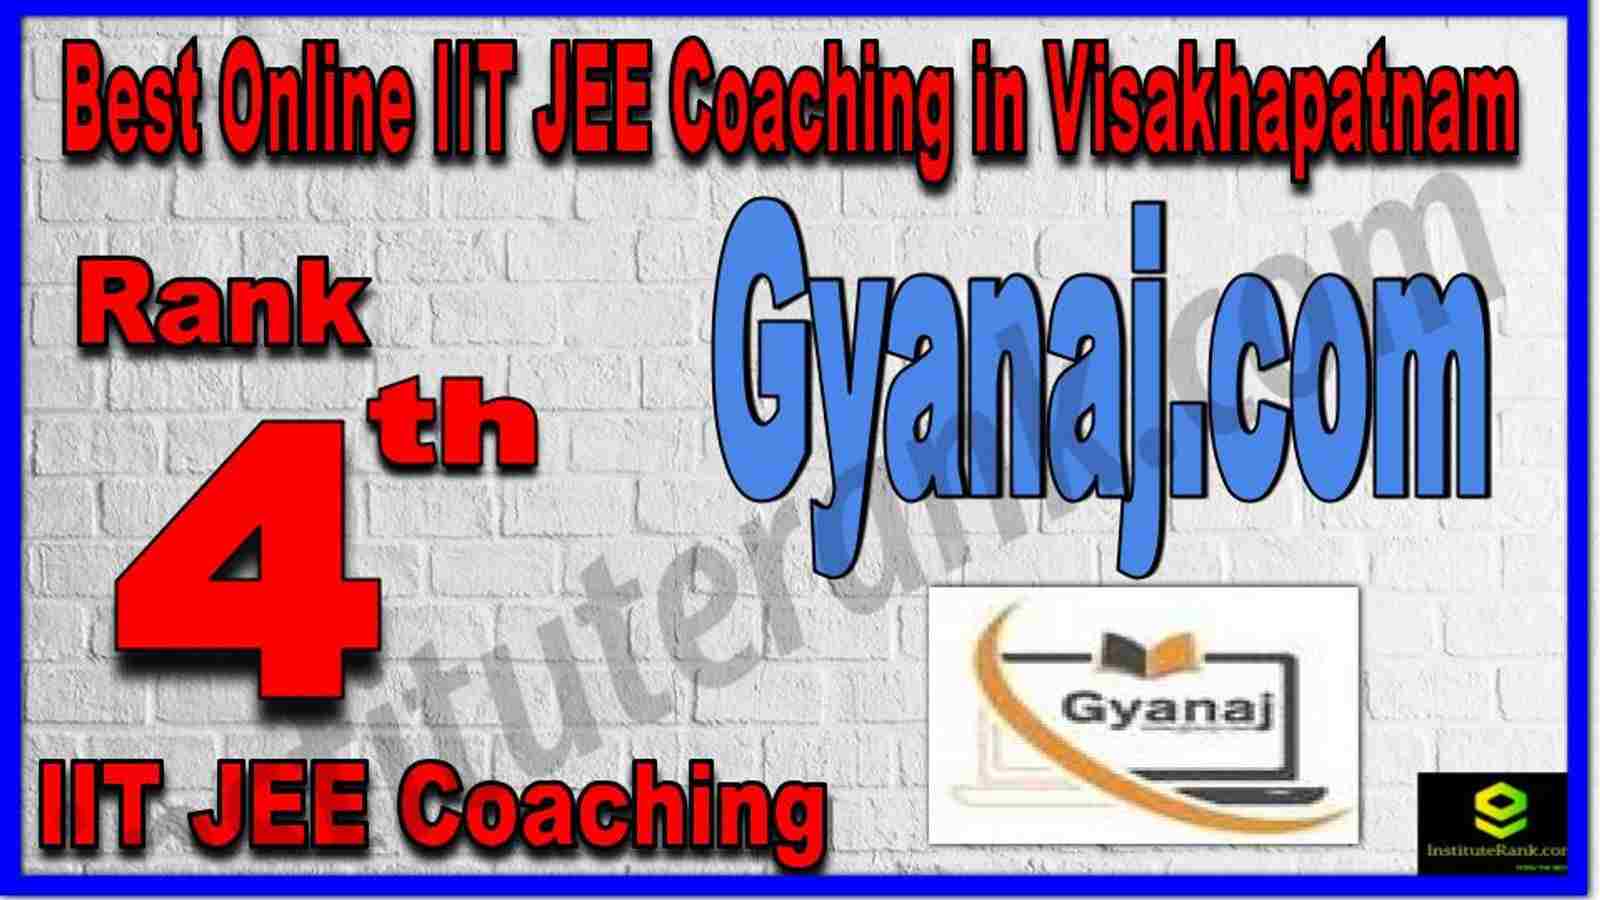 Rank 4th Best Online IIT JEE Coaching in Visakhapatnam